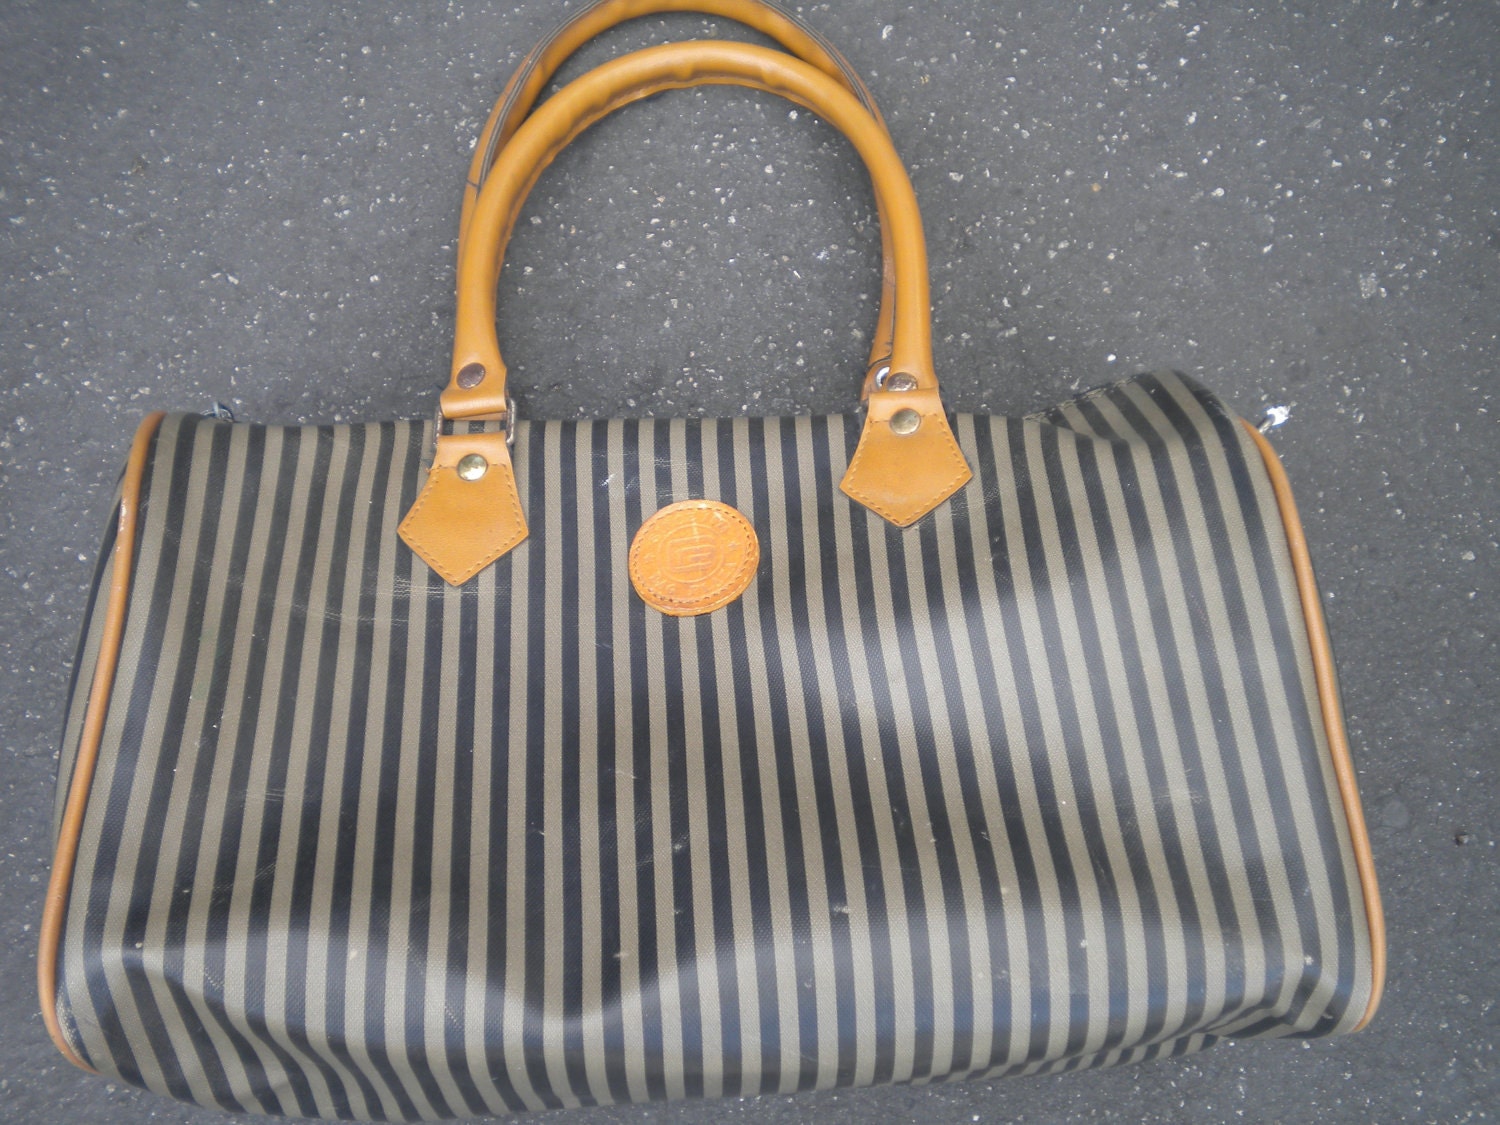 vintage striped handbag Fendi style 80s cool